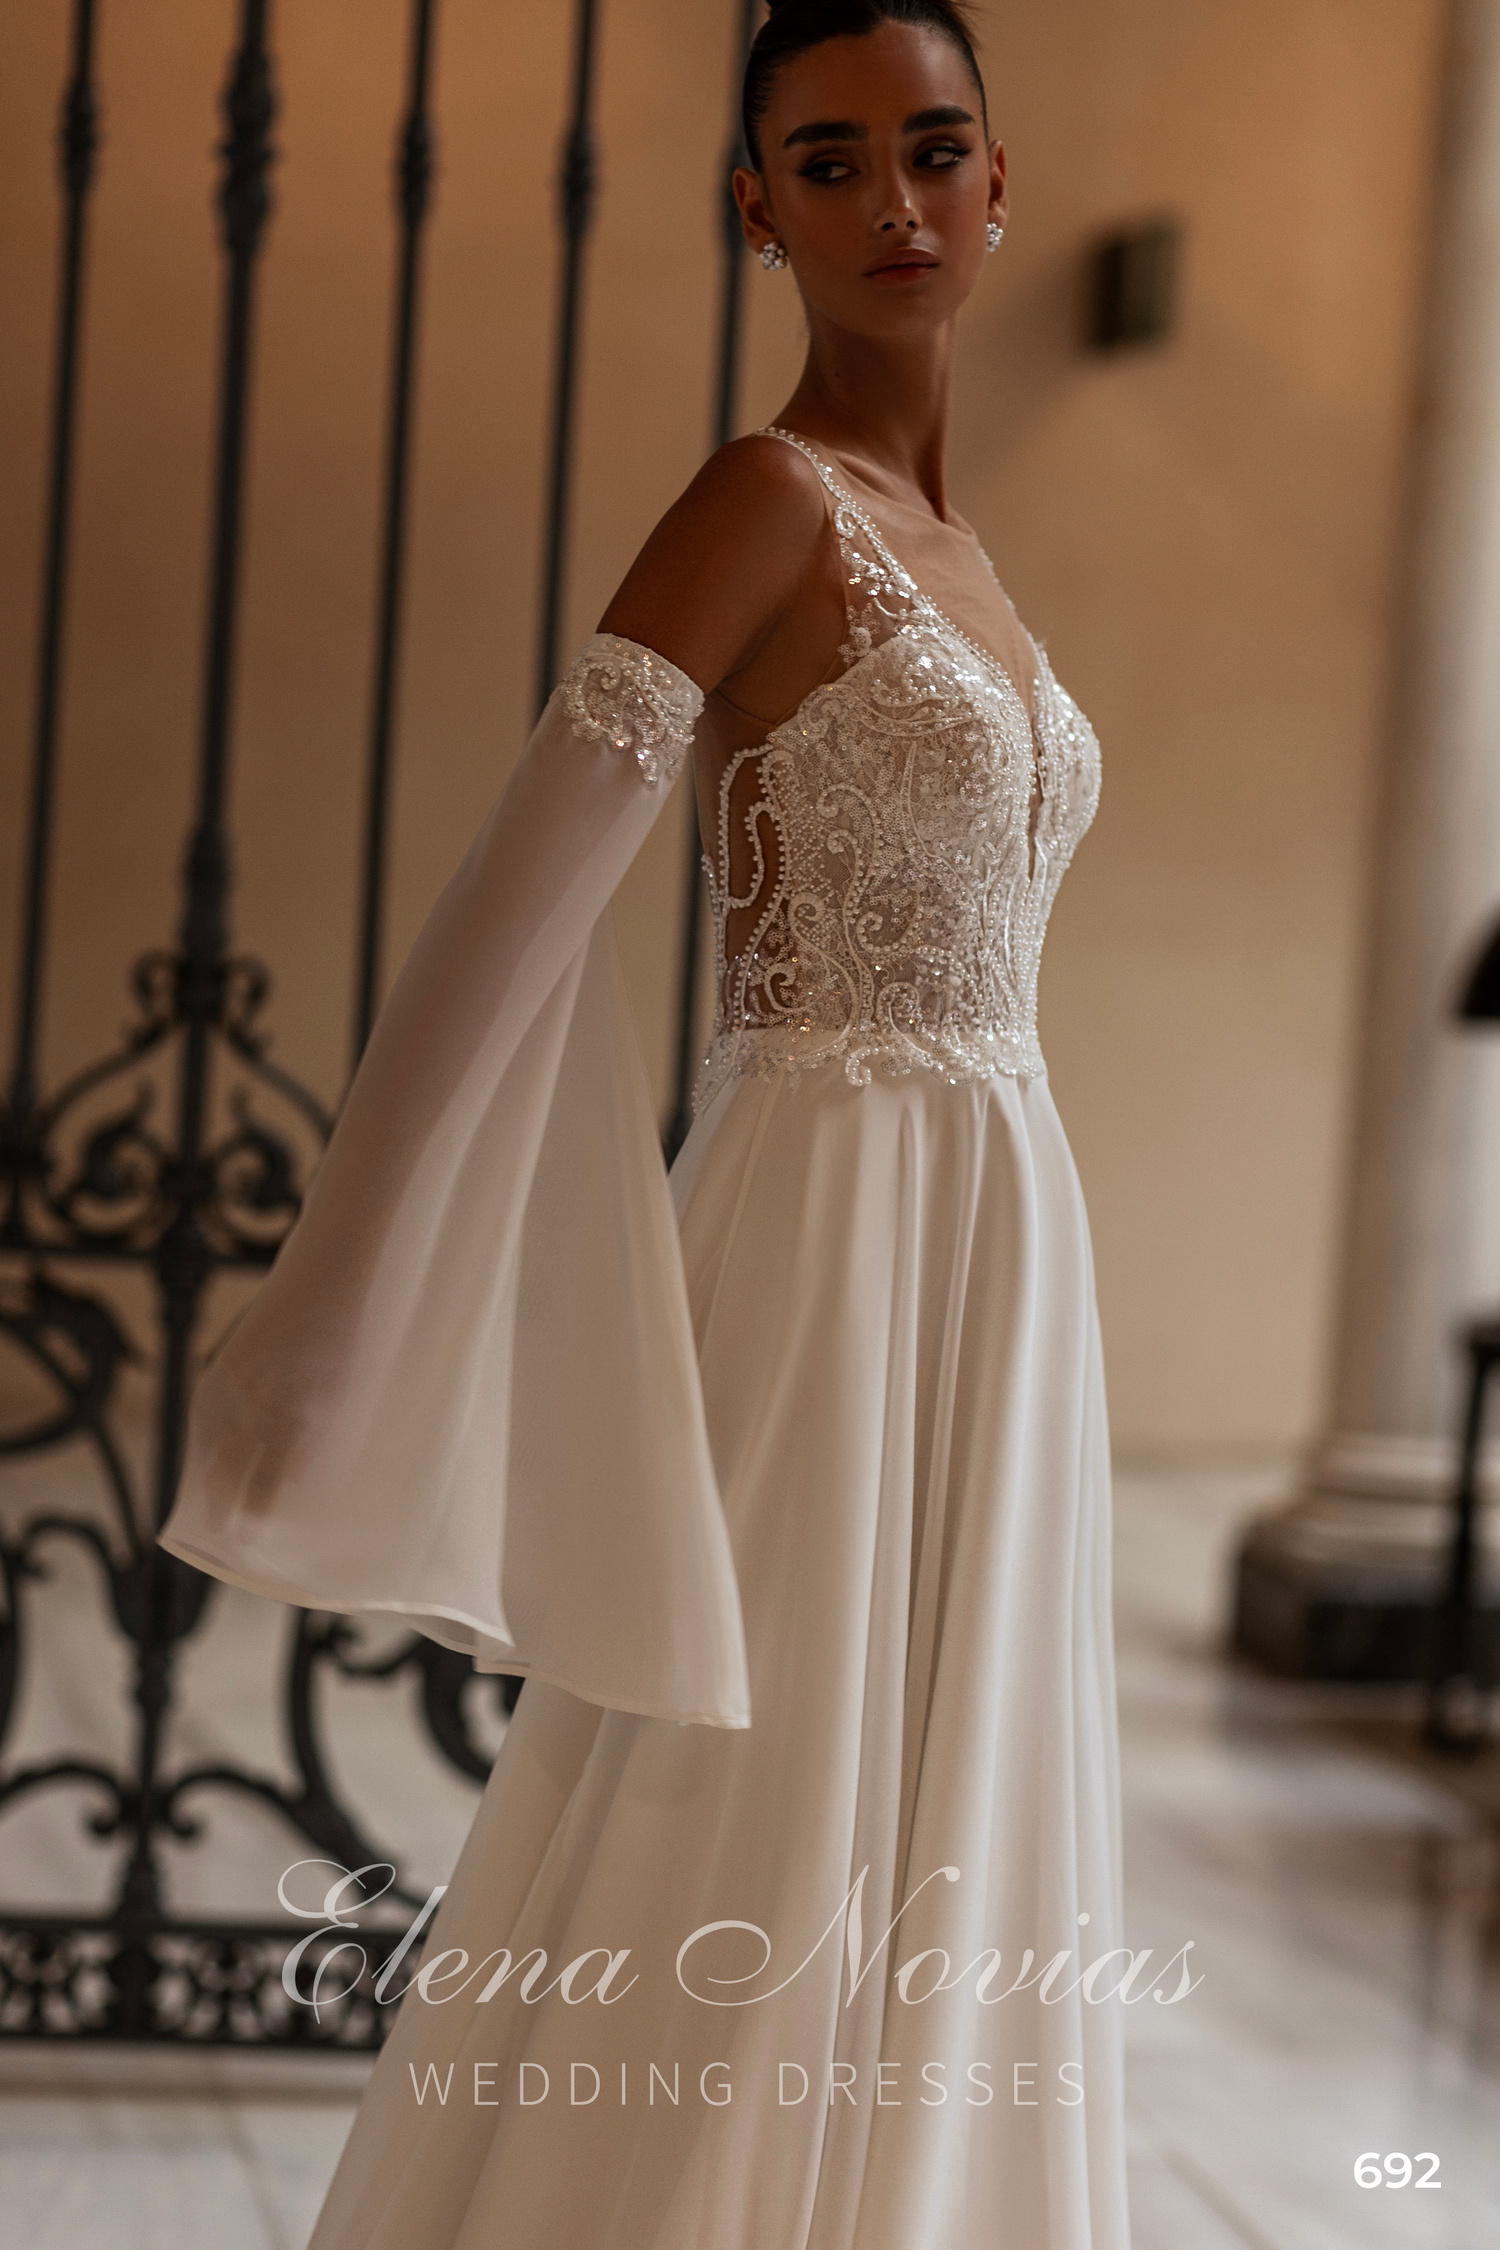 Wedding dresses 692 3